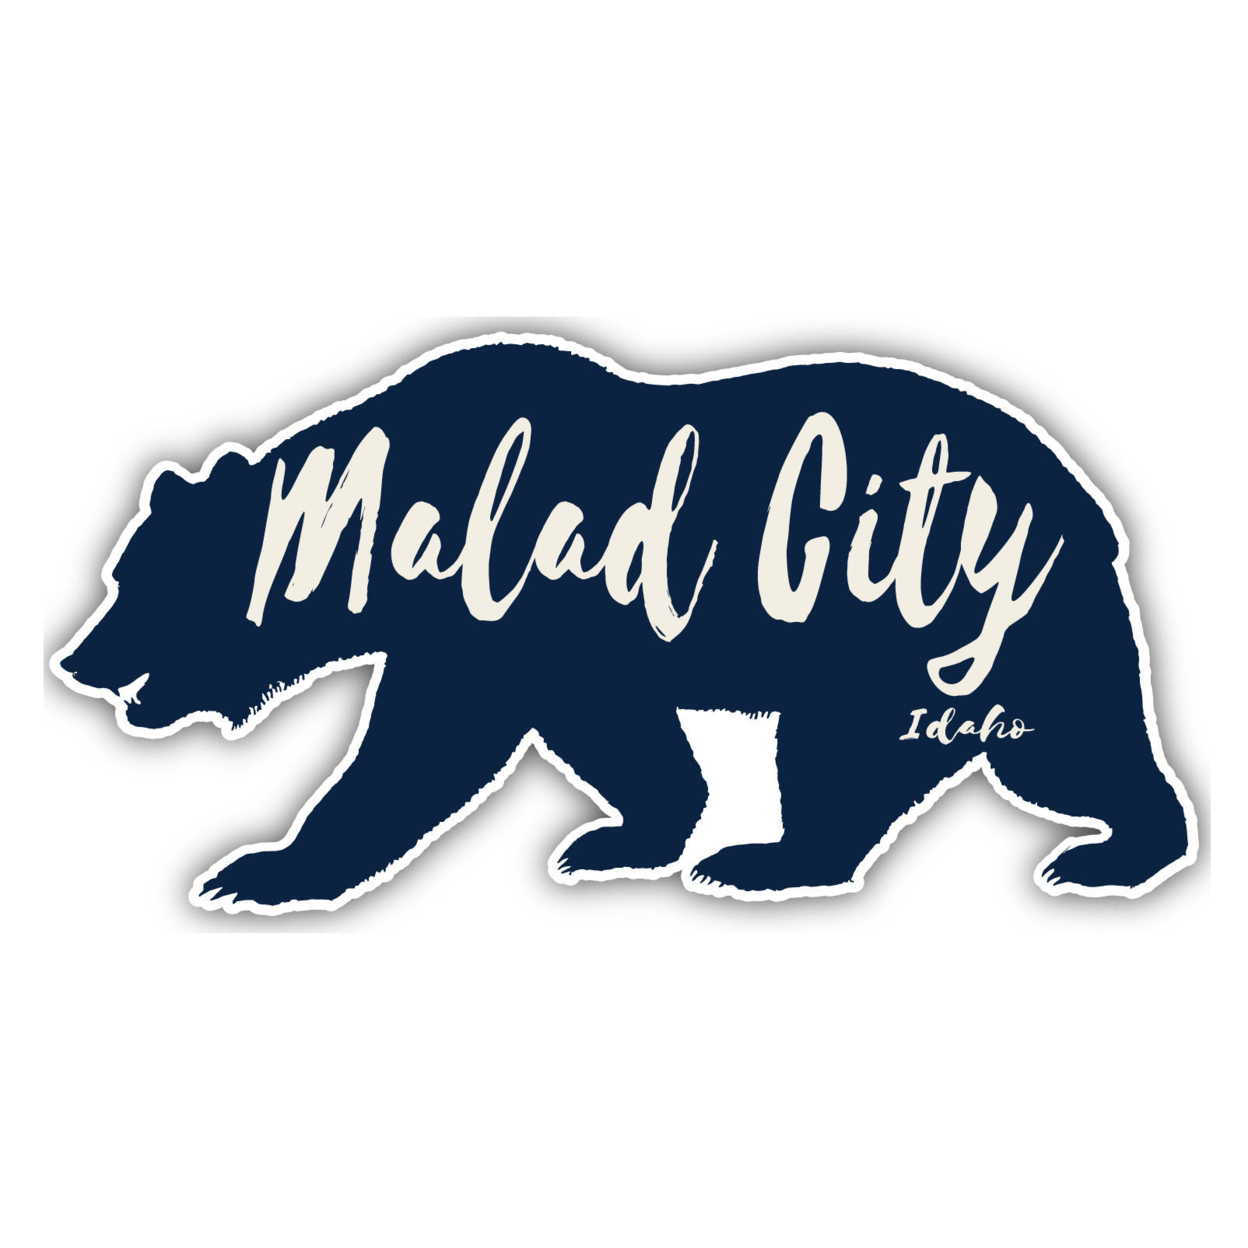 Malad City Idaho Souvenir Decorative Stickers (Choose Theme And Size) - 4-Inch, Tent